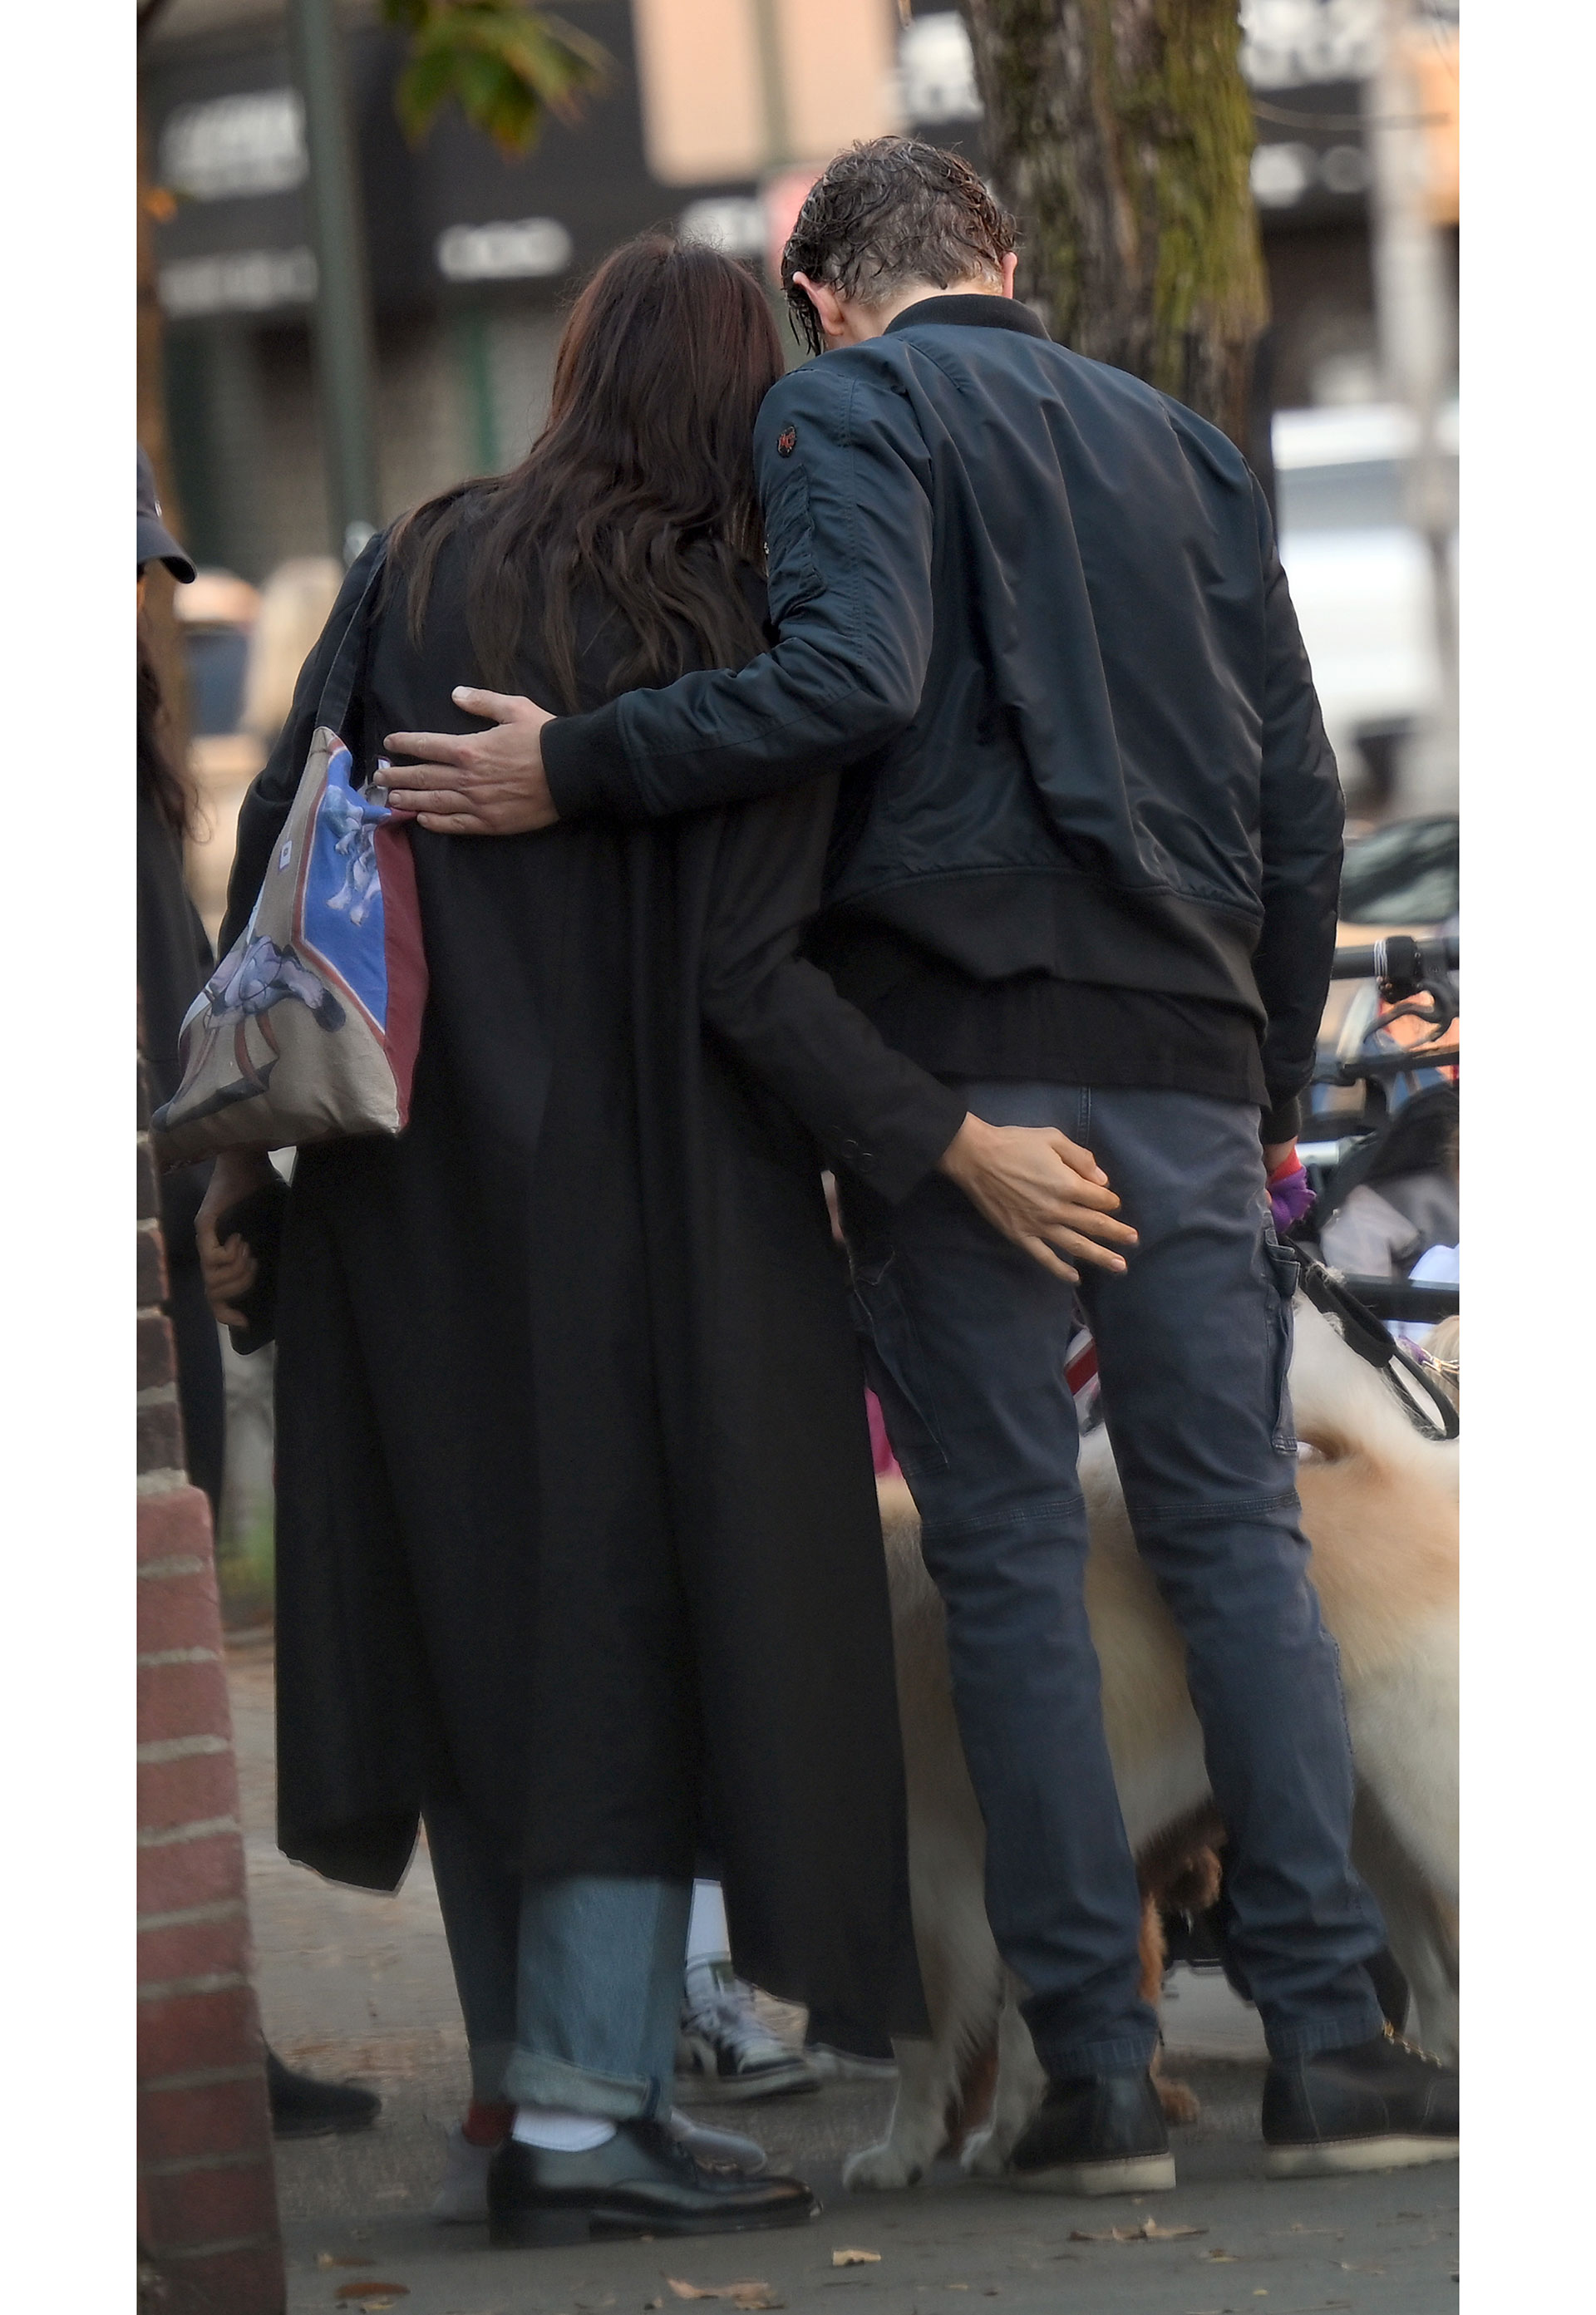 Bradley Cooper and Irina Shayk were very affectionate during a walk through Manhattan (The Grosby Group)